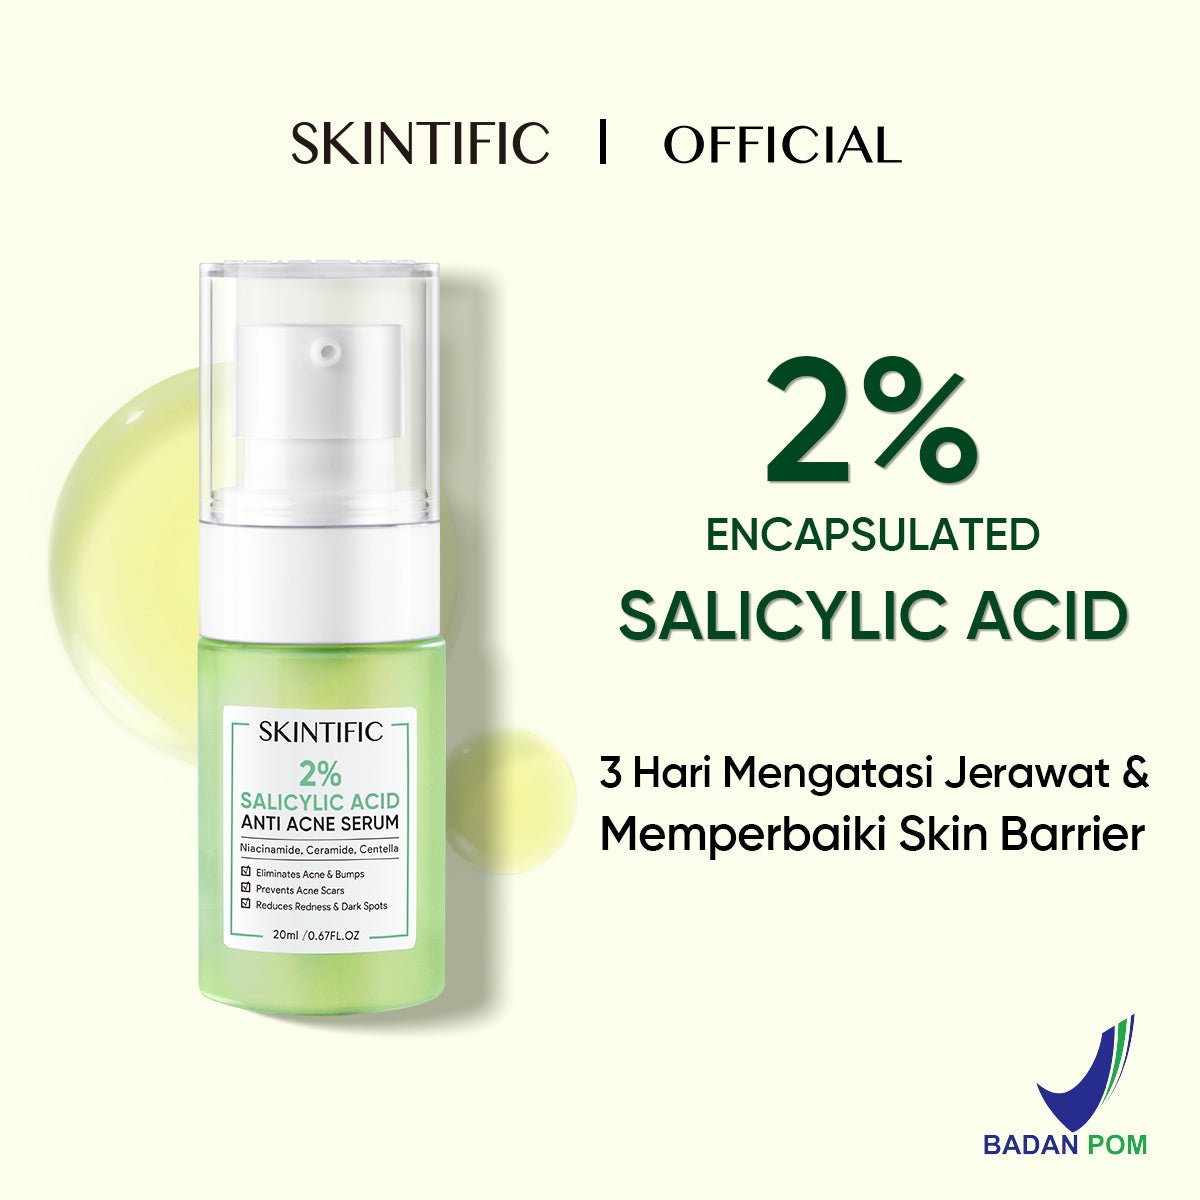 2% Salicylic Acid Anti Acne Serum